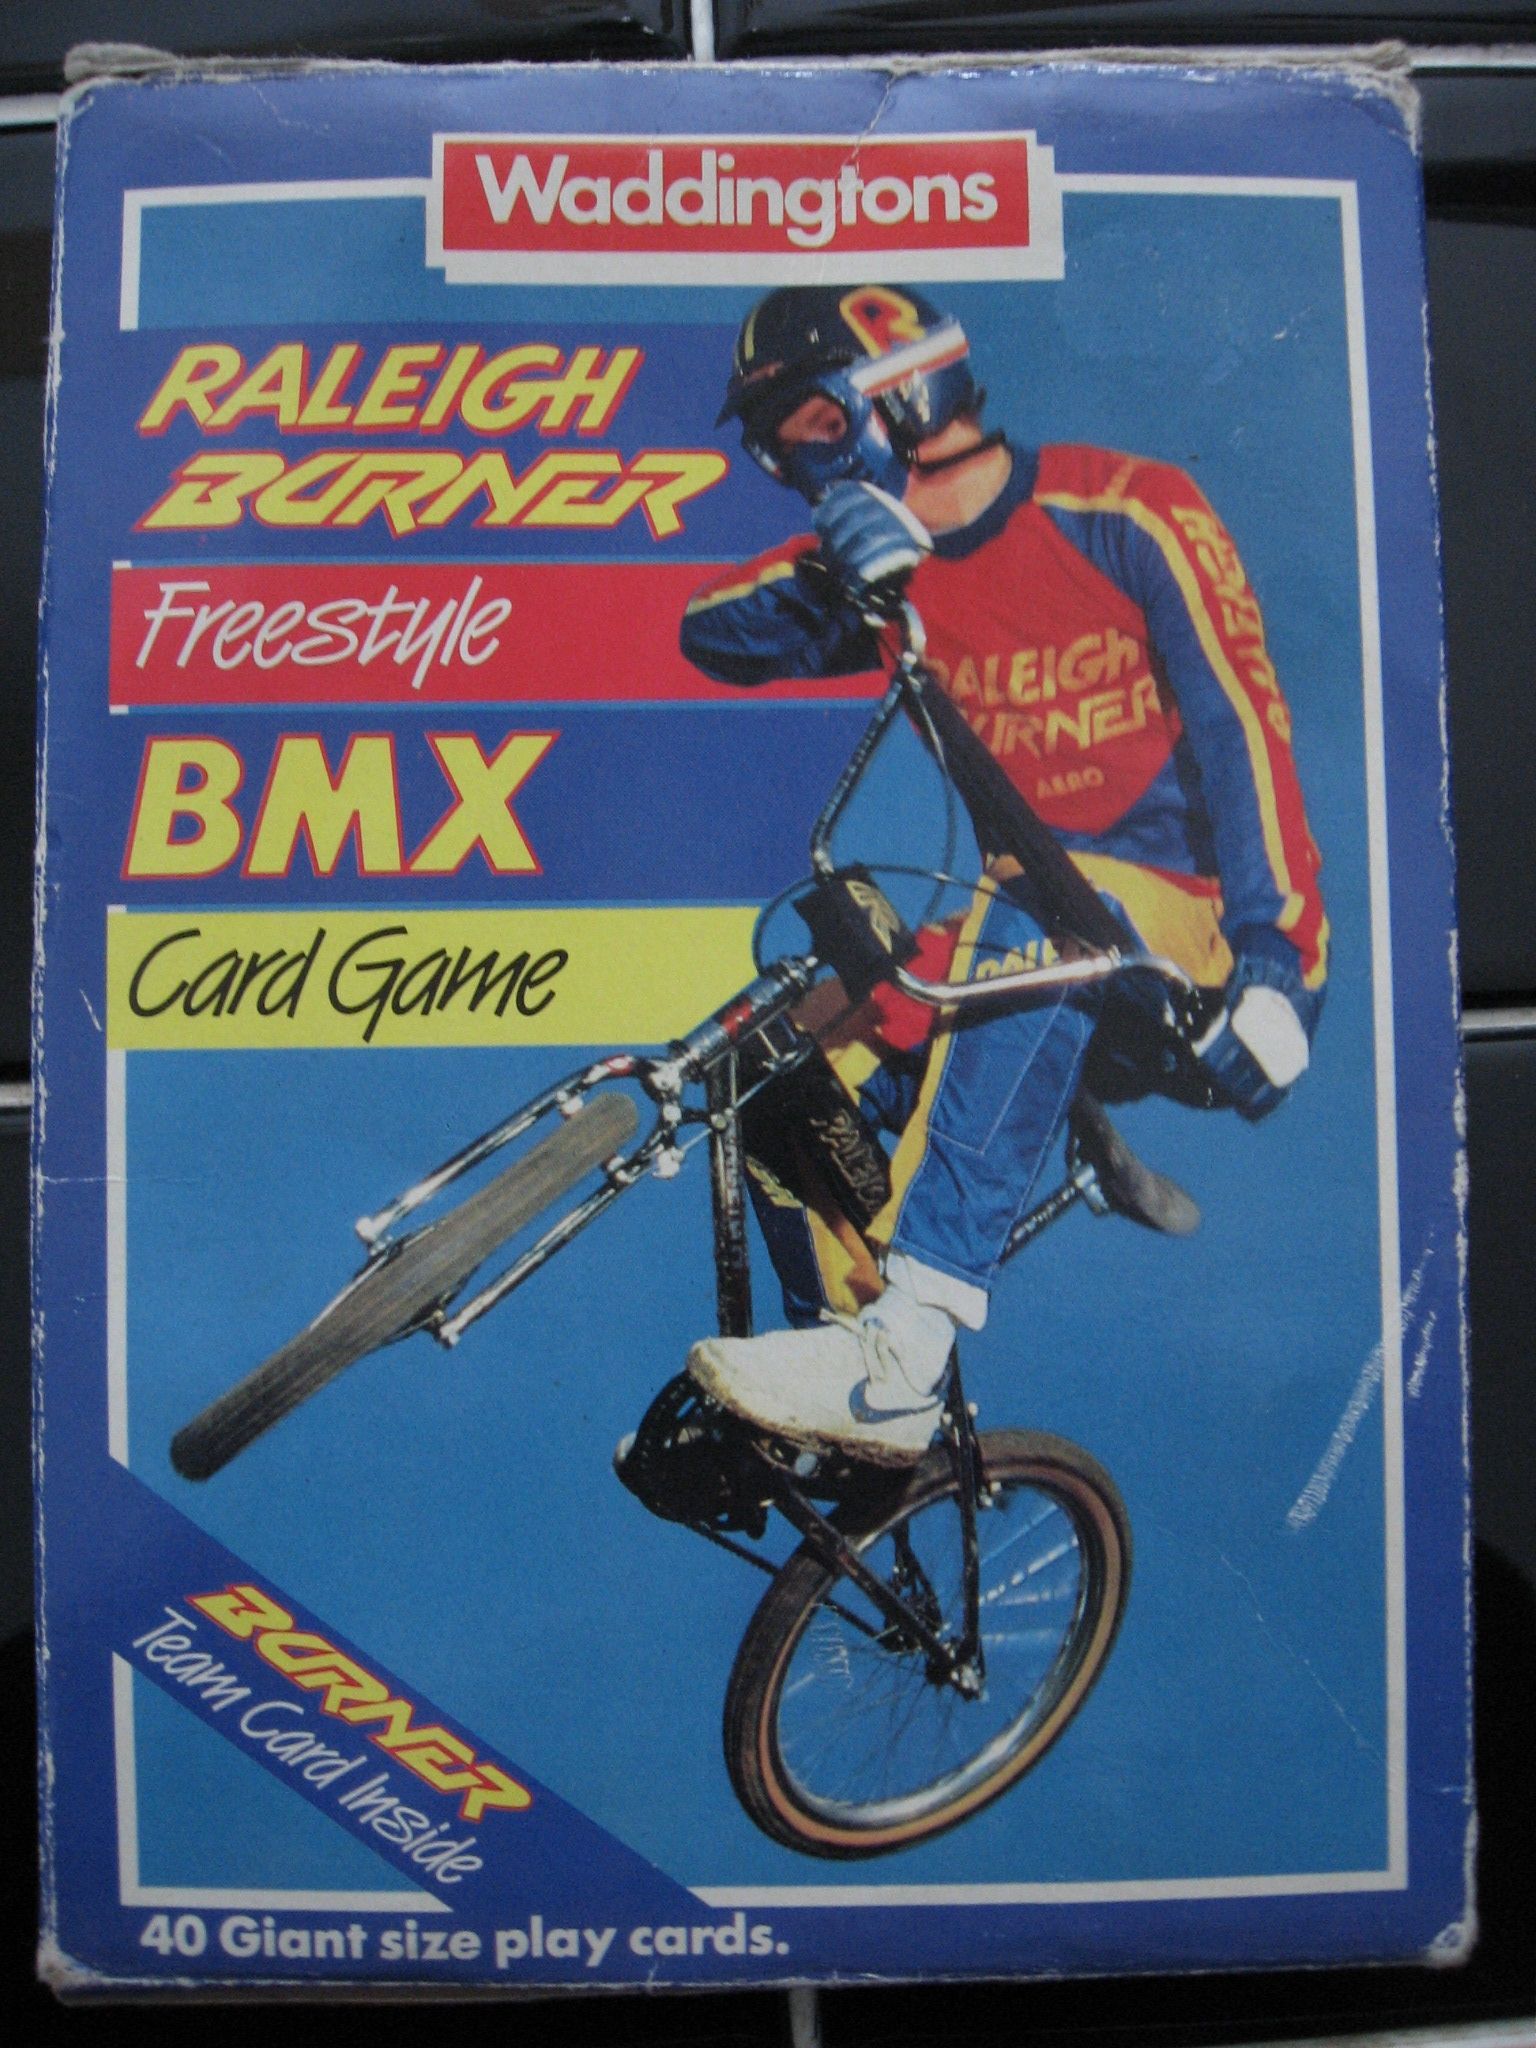 Raleigh Burner Freestyle BMX Card Game